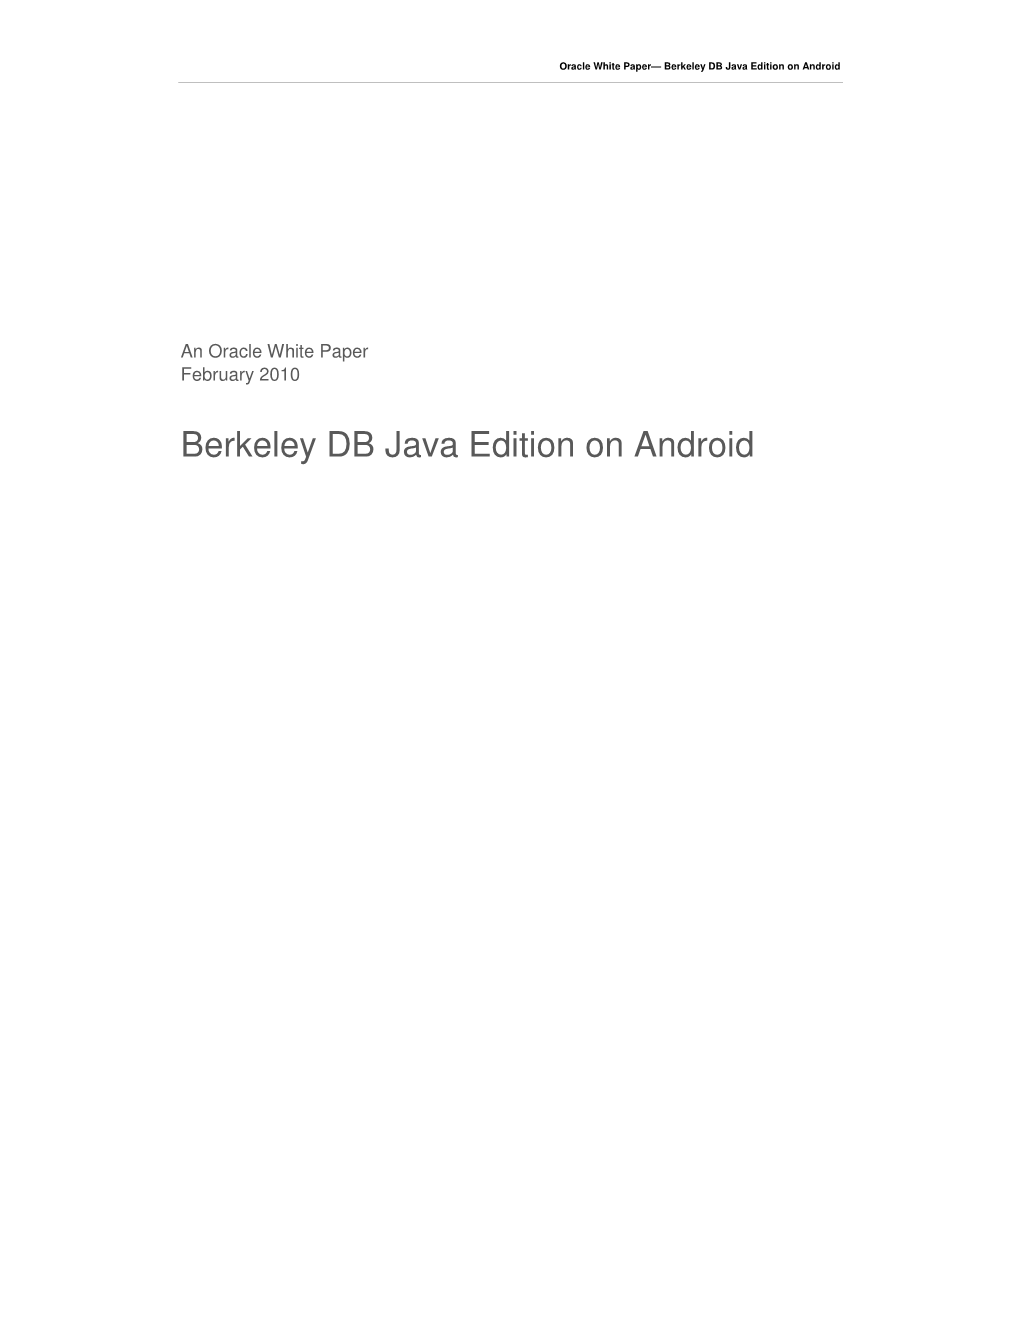 Berkeley DB Java Edition on Android